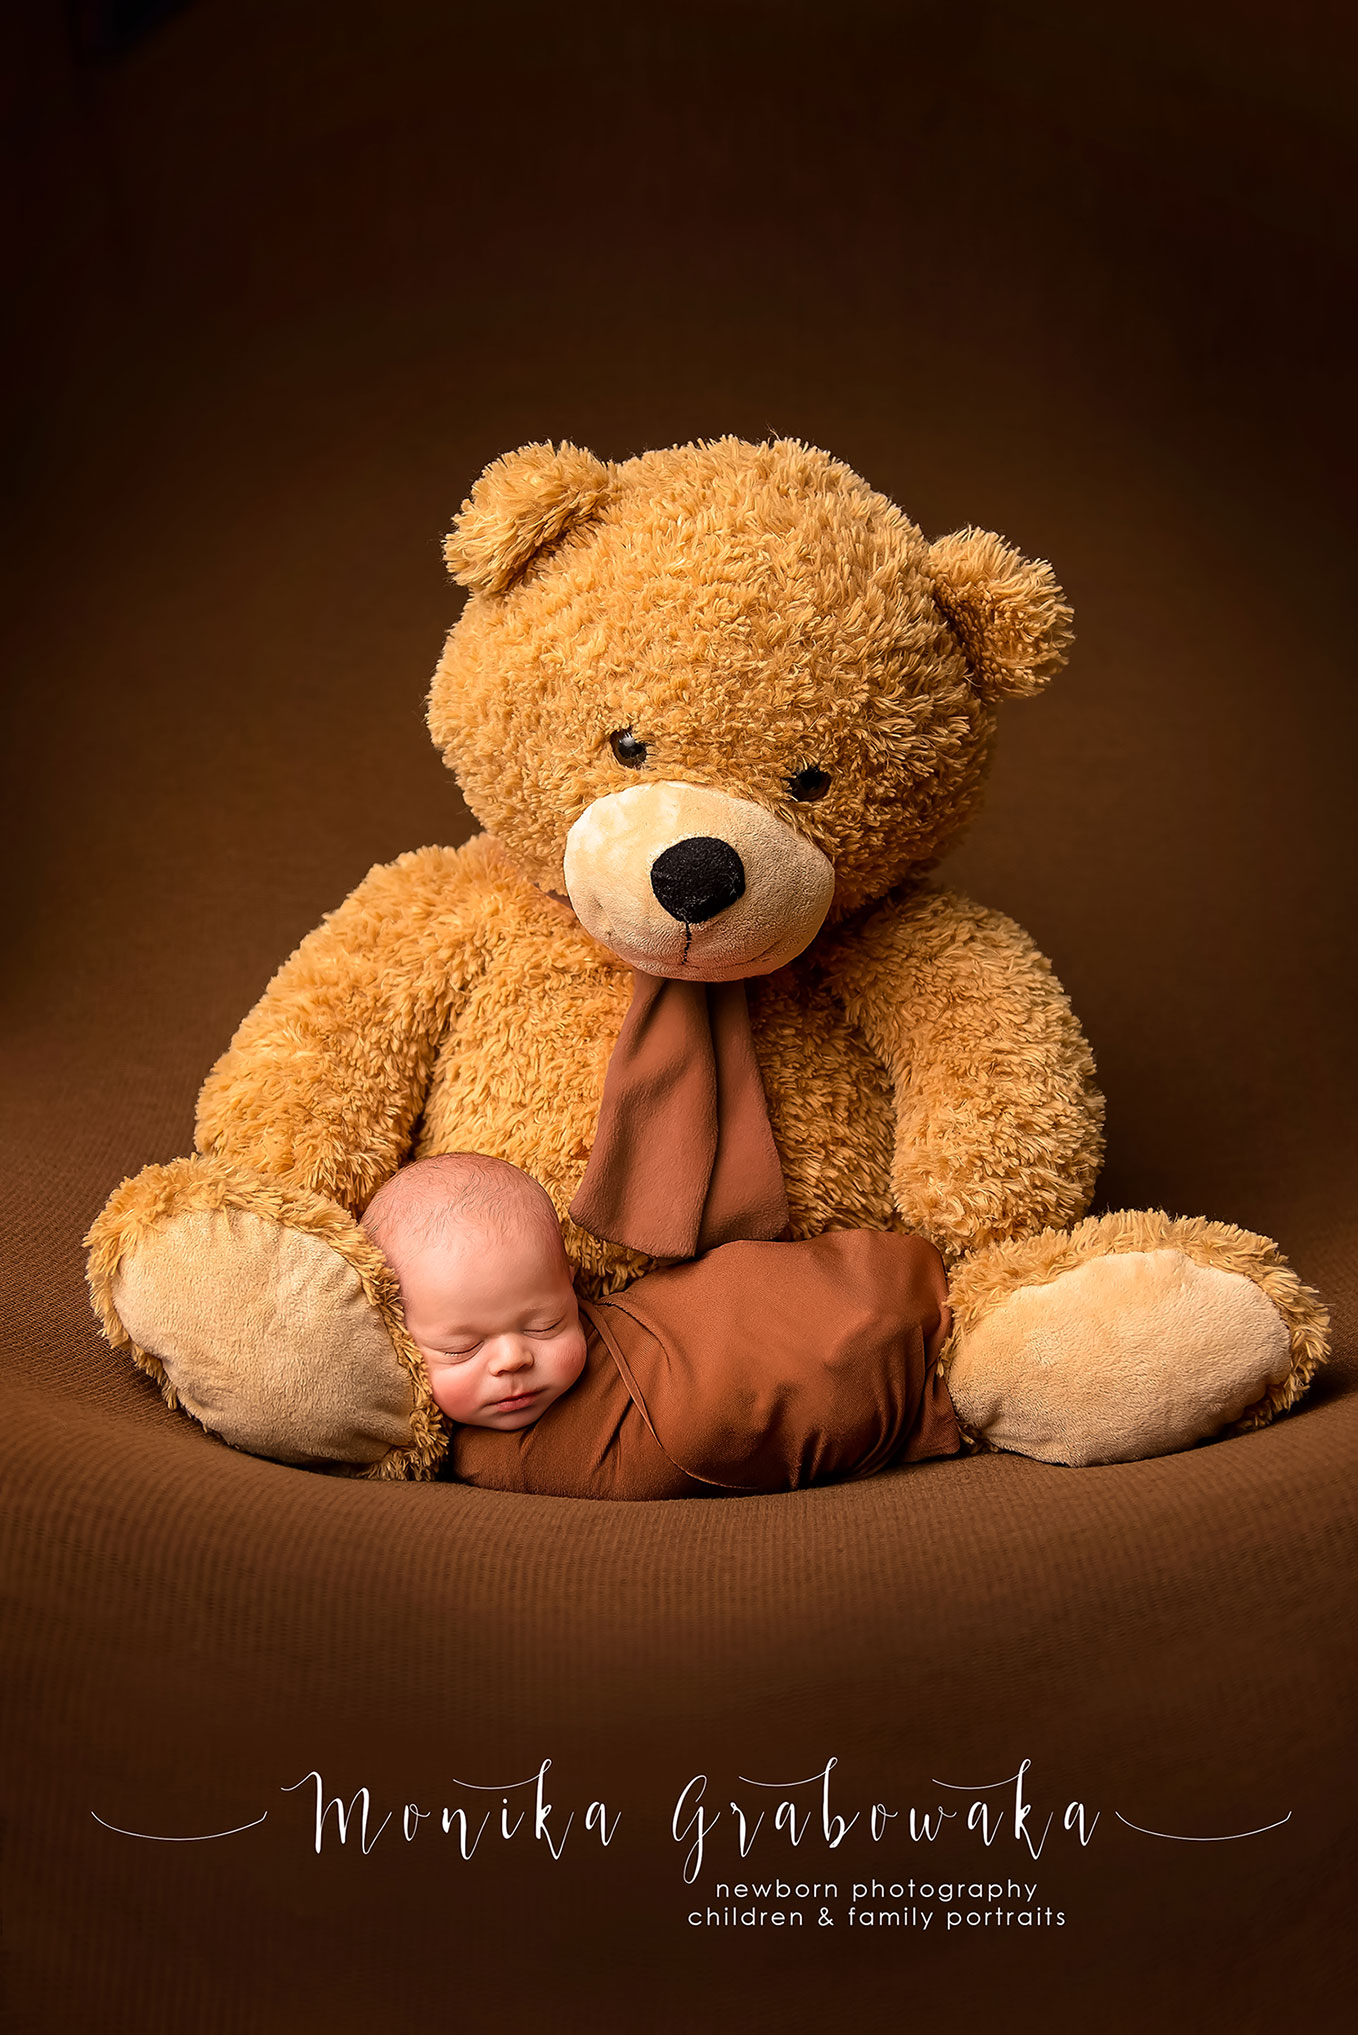 Newborn baby and teddy bear